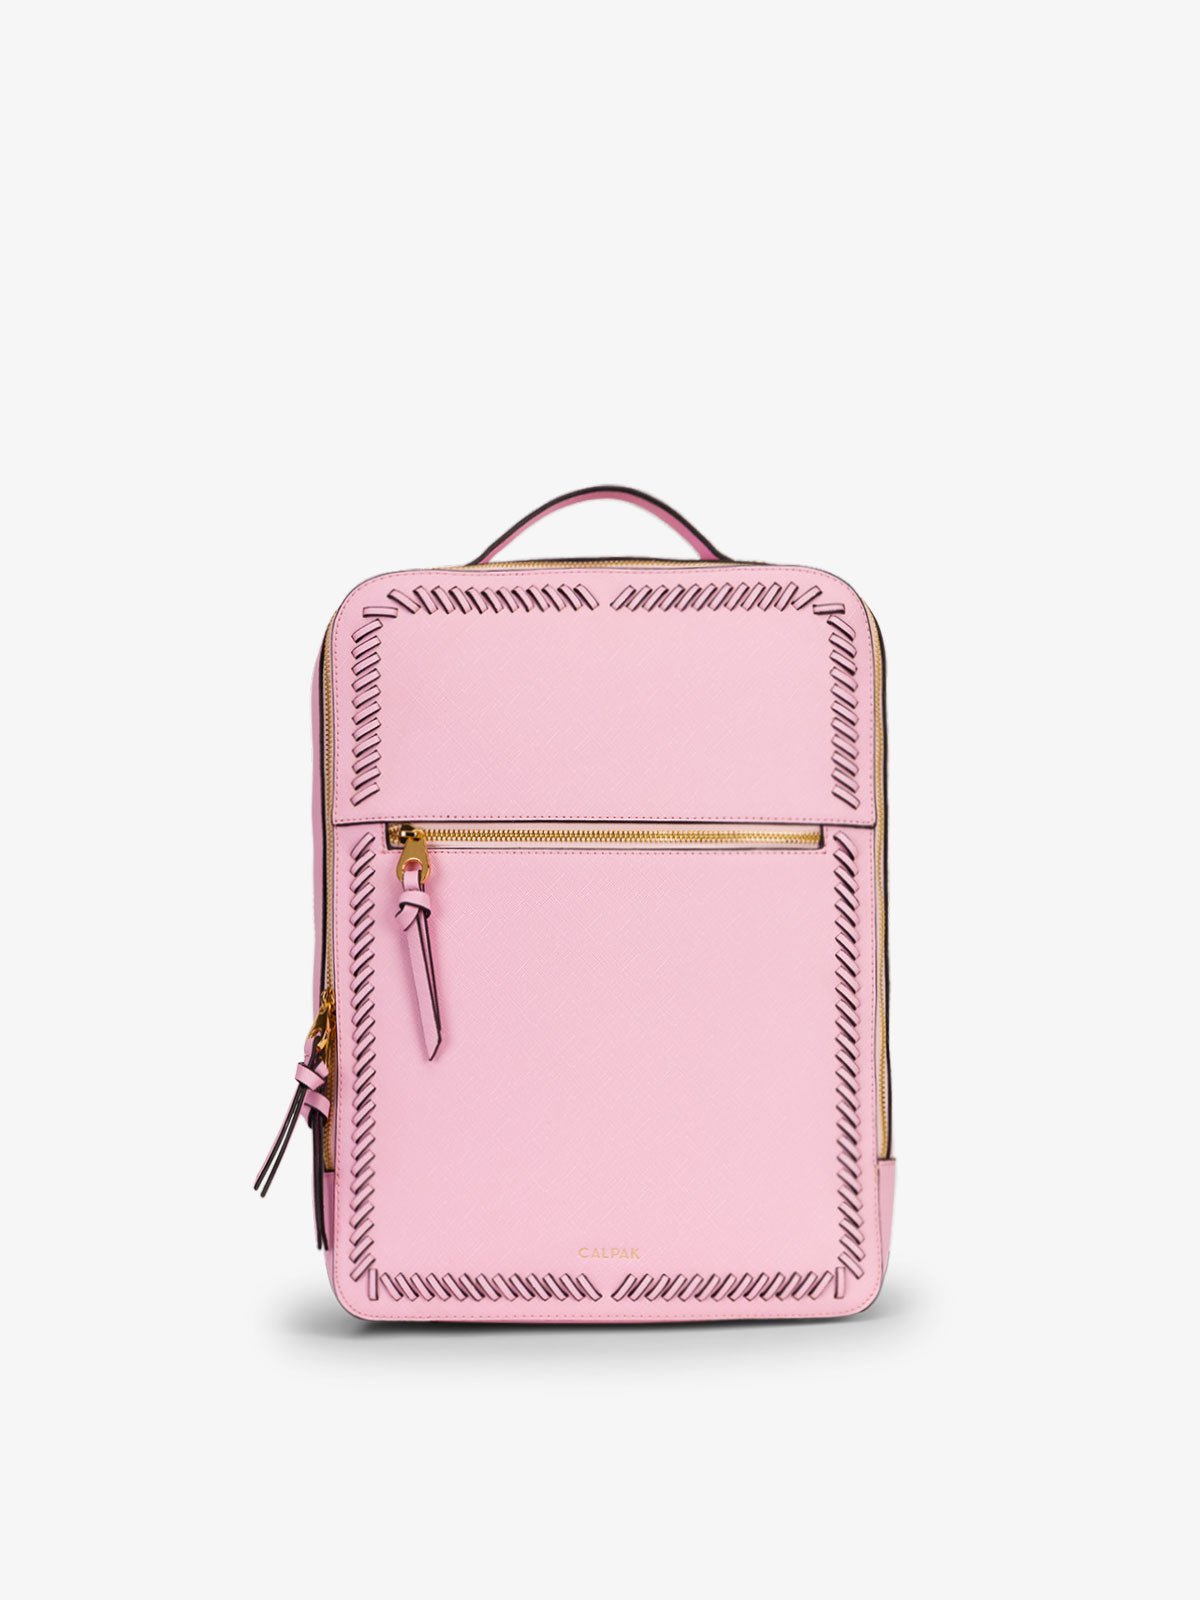 CALPAK Kaya 15 inch Laptop Backpack for women in pink strawberry